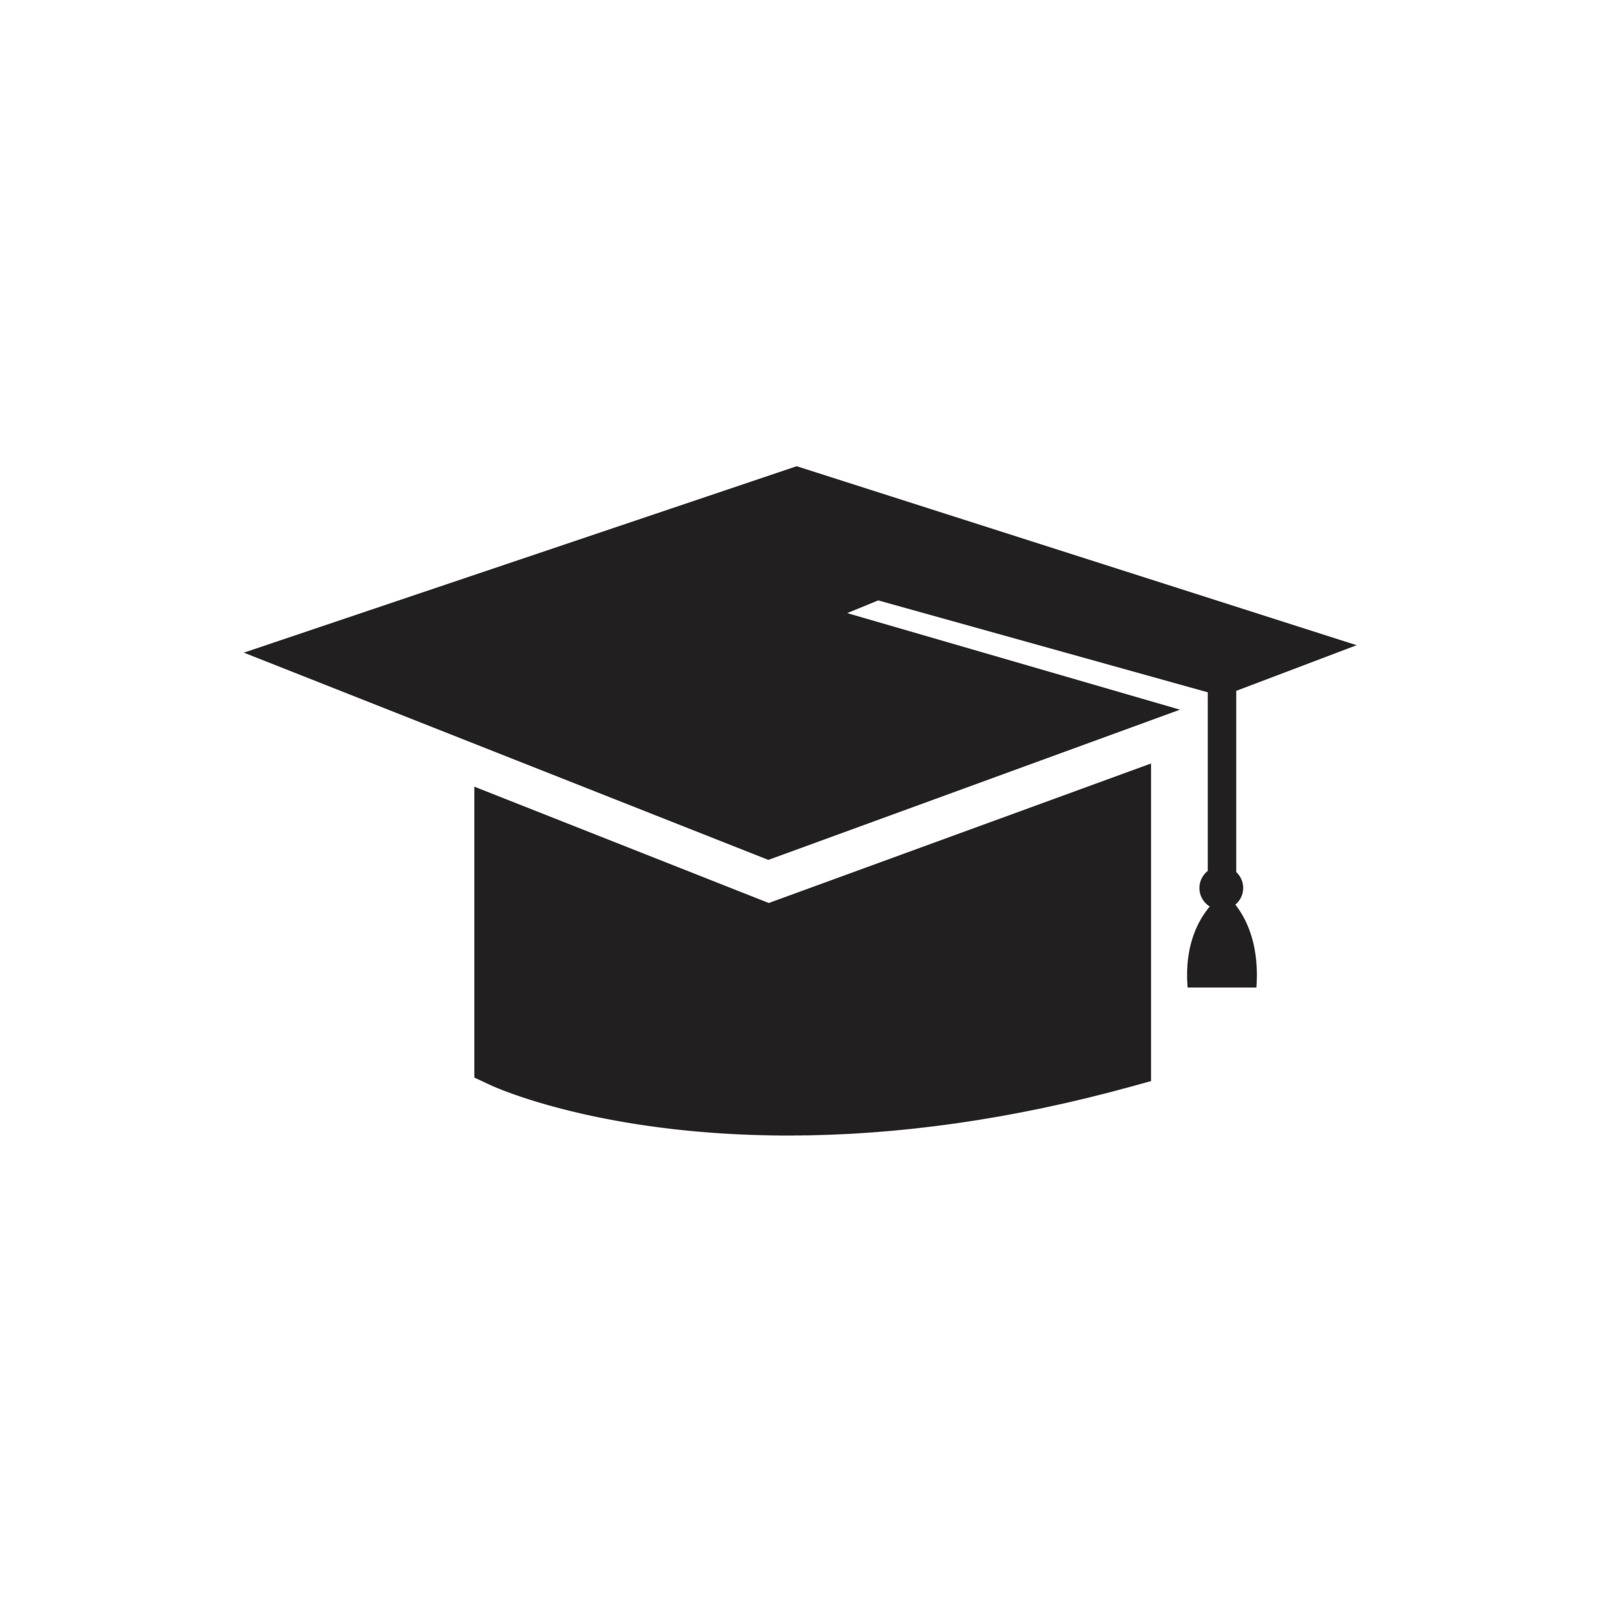 Graduation cap icon by iconmama